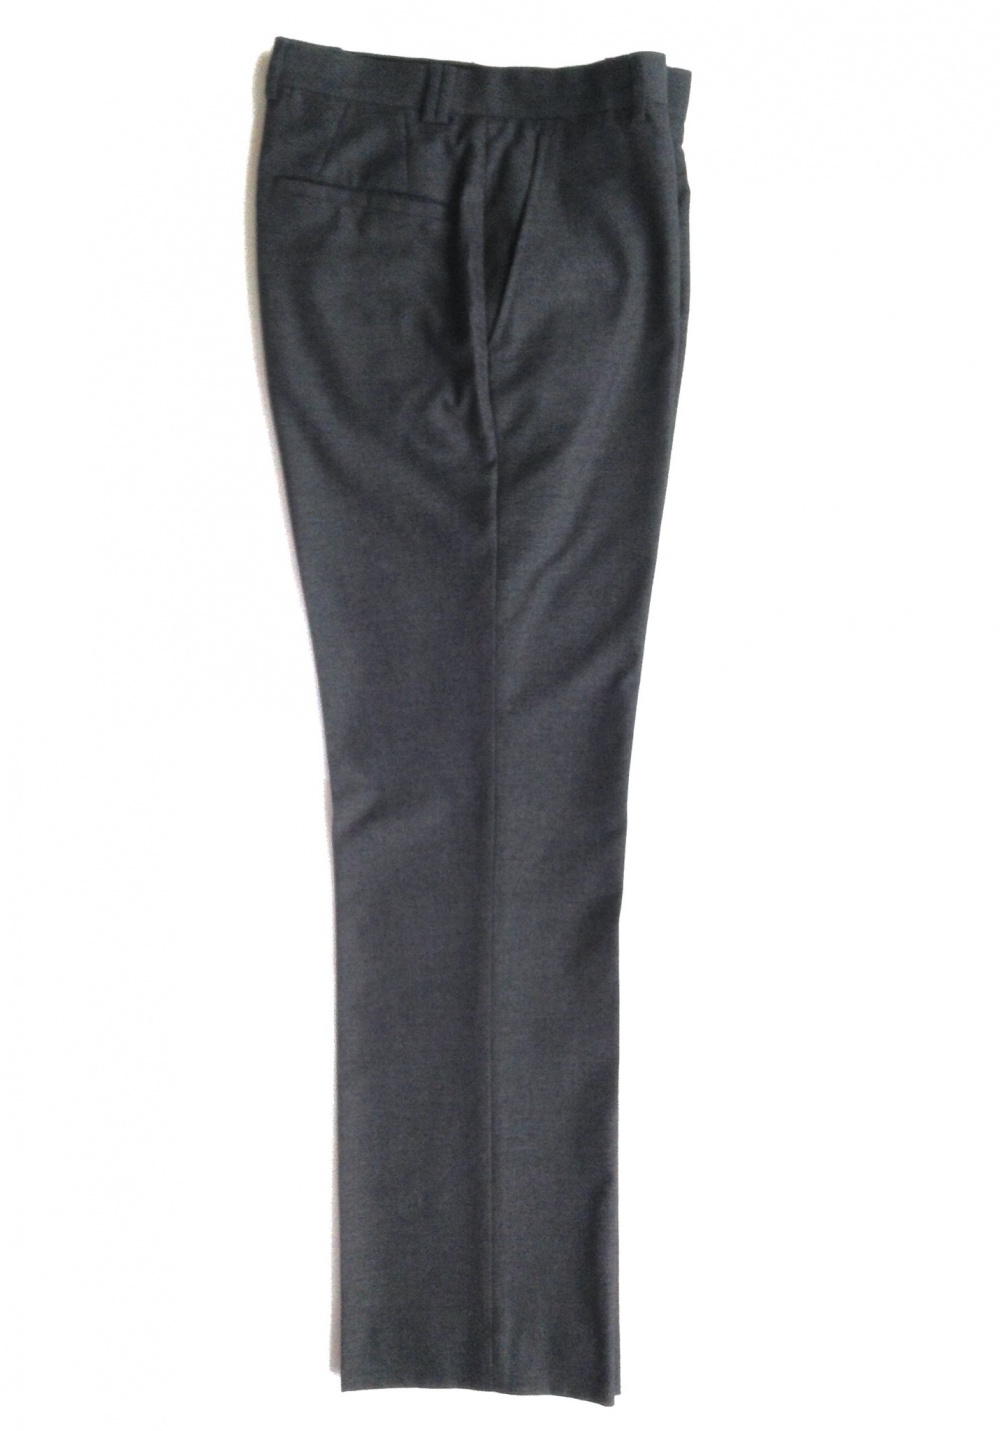 Классические мужские брюки, темно-серого цвета, на 46 (UK 32R EUR 81R) р., River Island, б/у 1раз